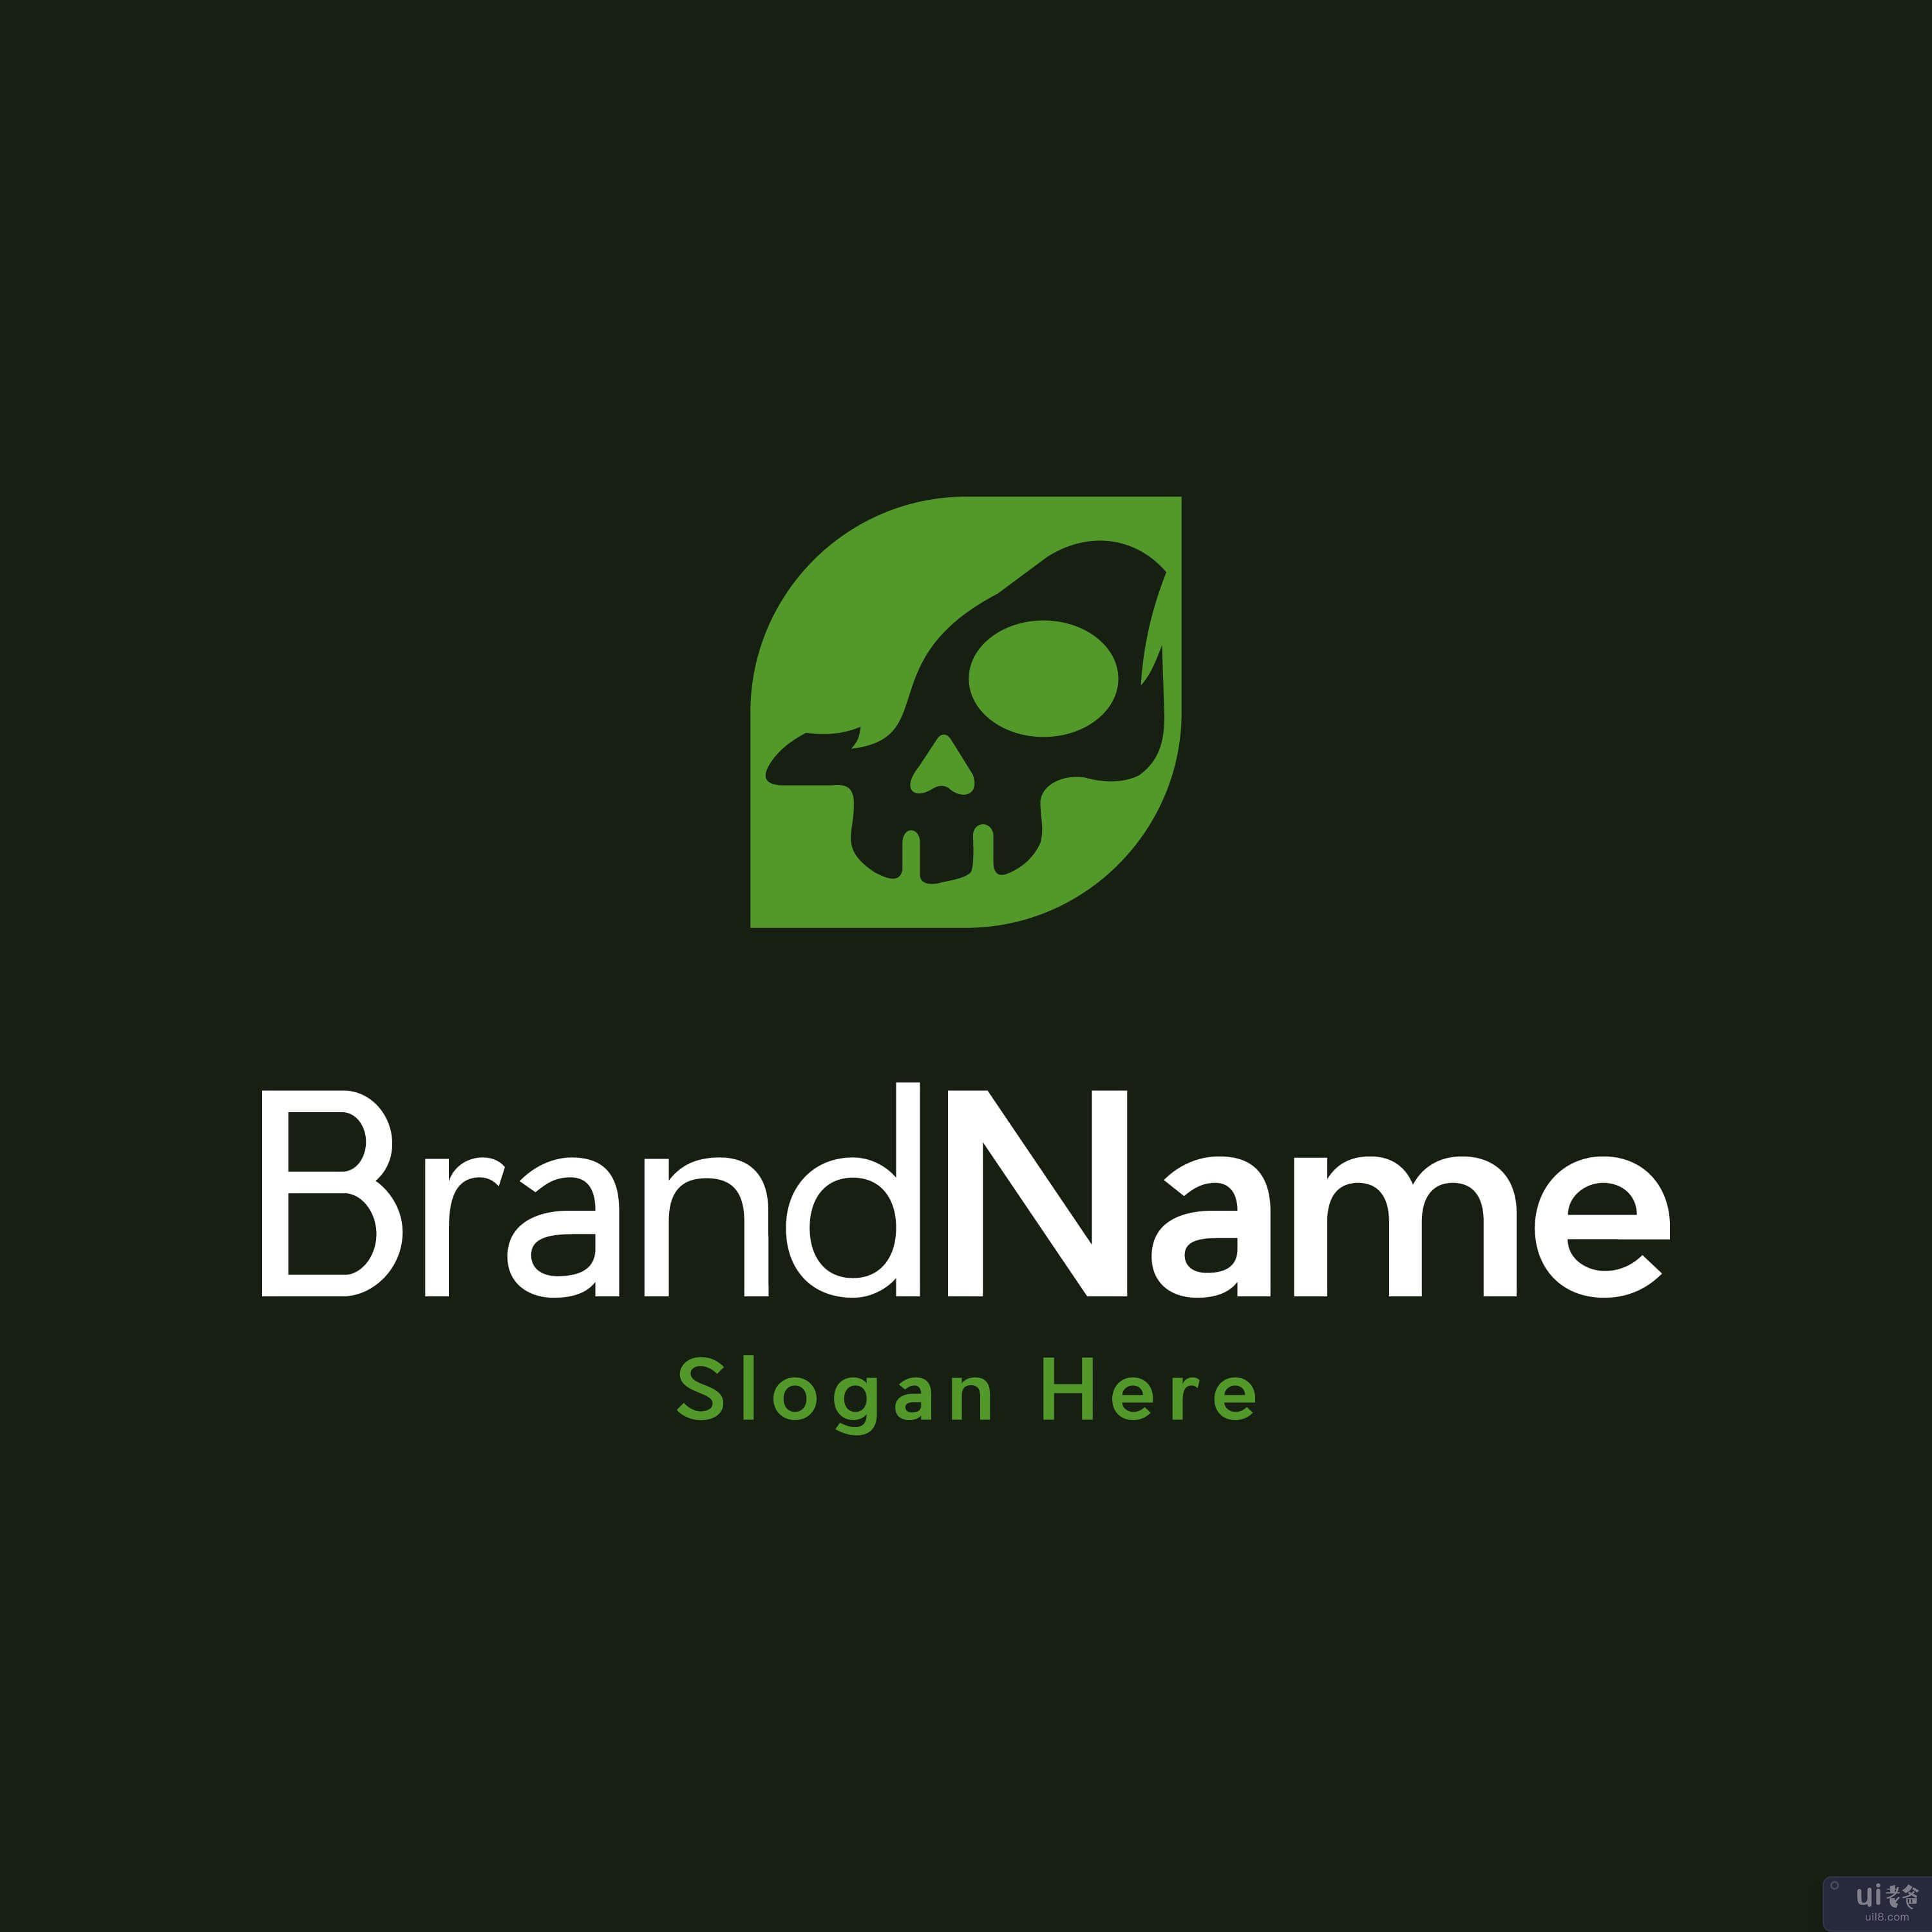 骷髅叶绿色可怕的创意标志矢量(Skull leaf green scary creative logo vector)插图